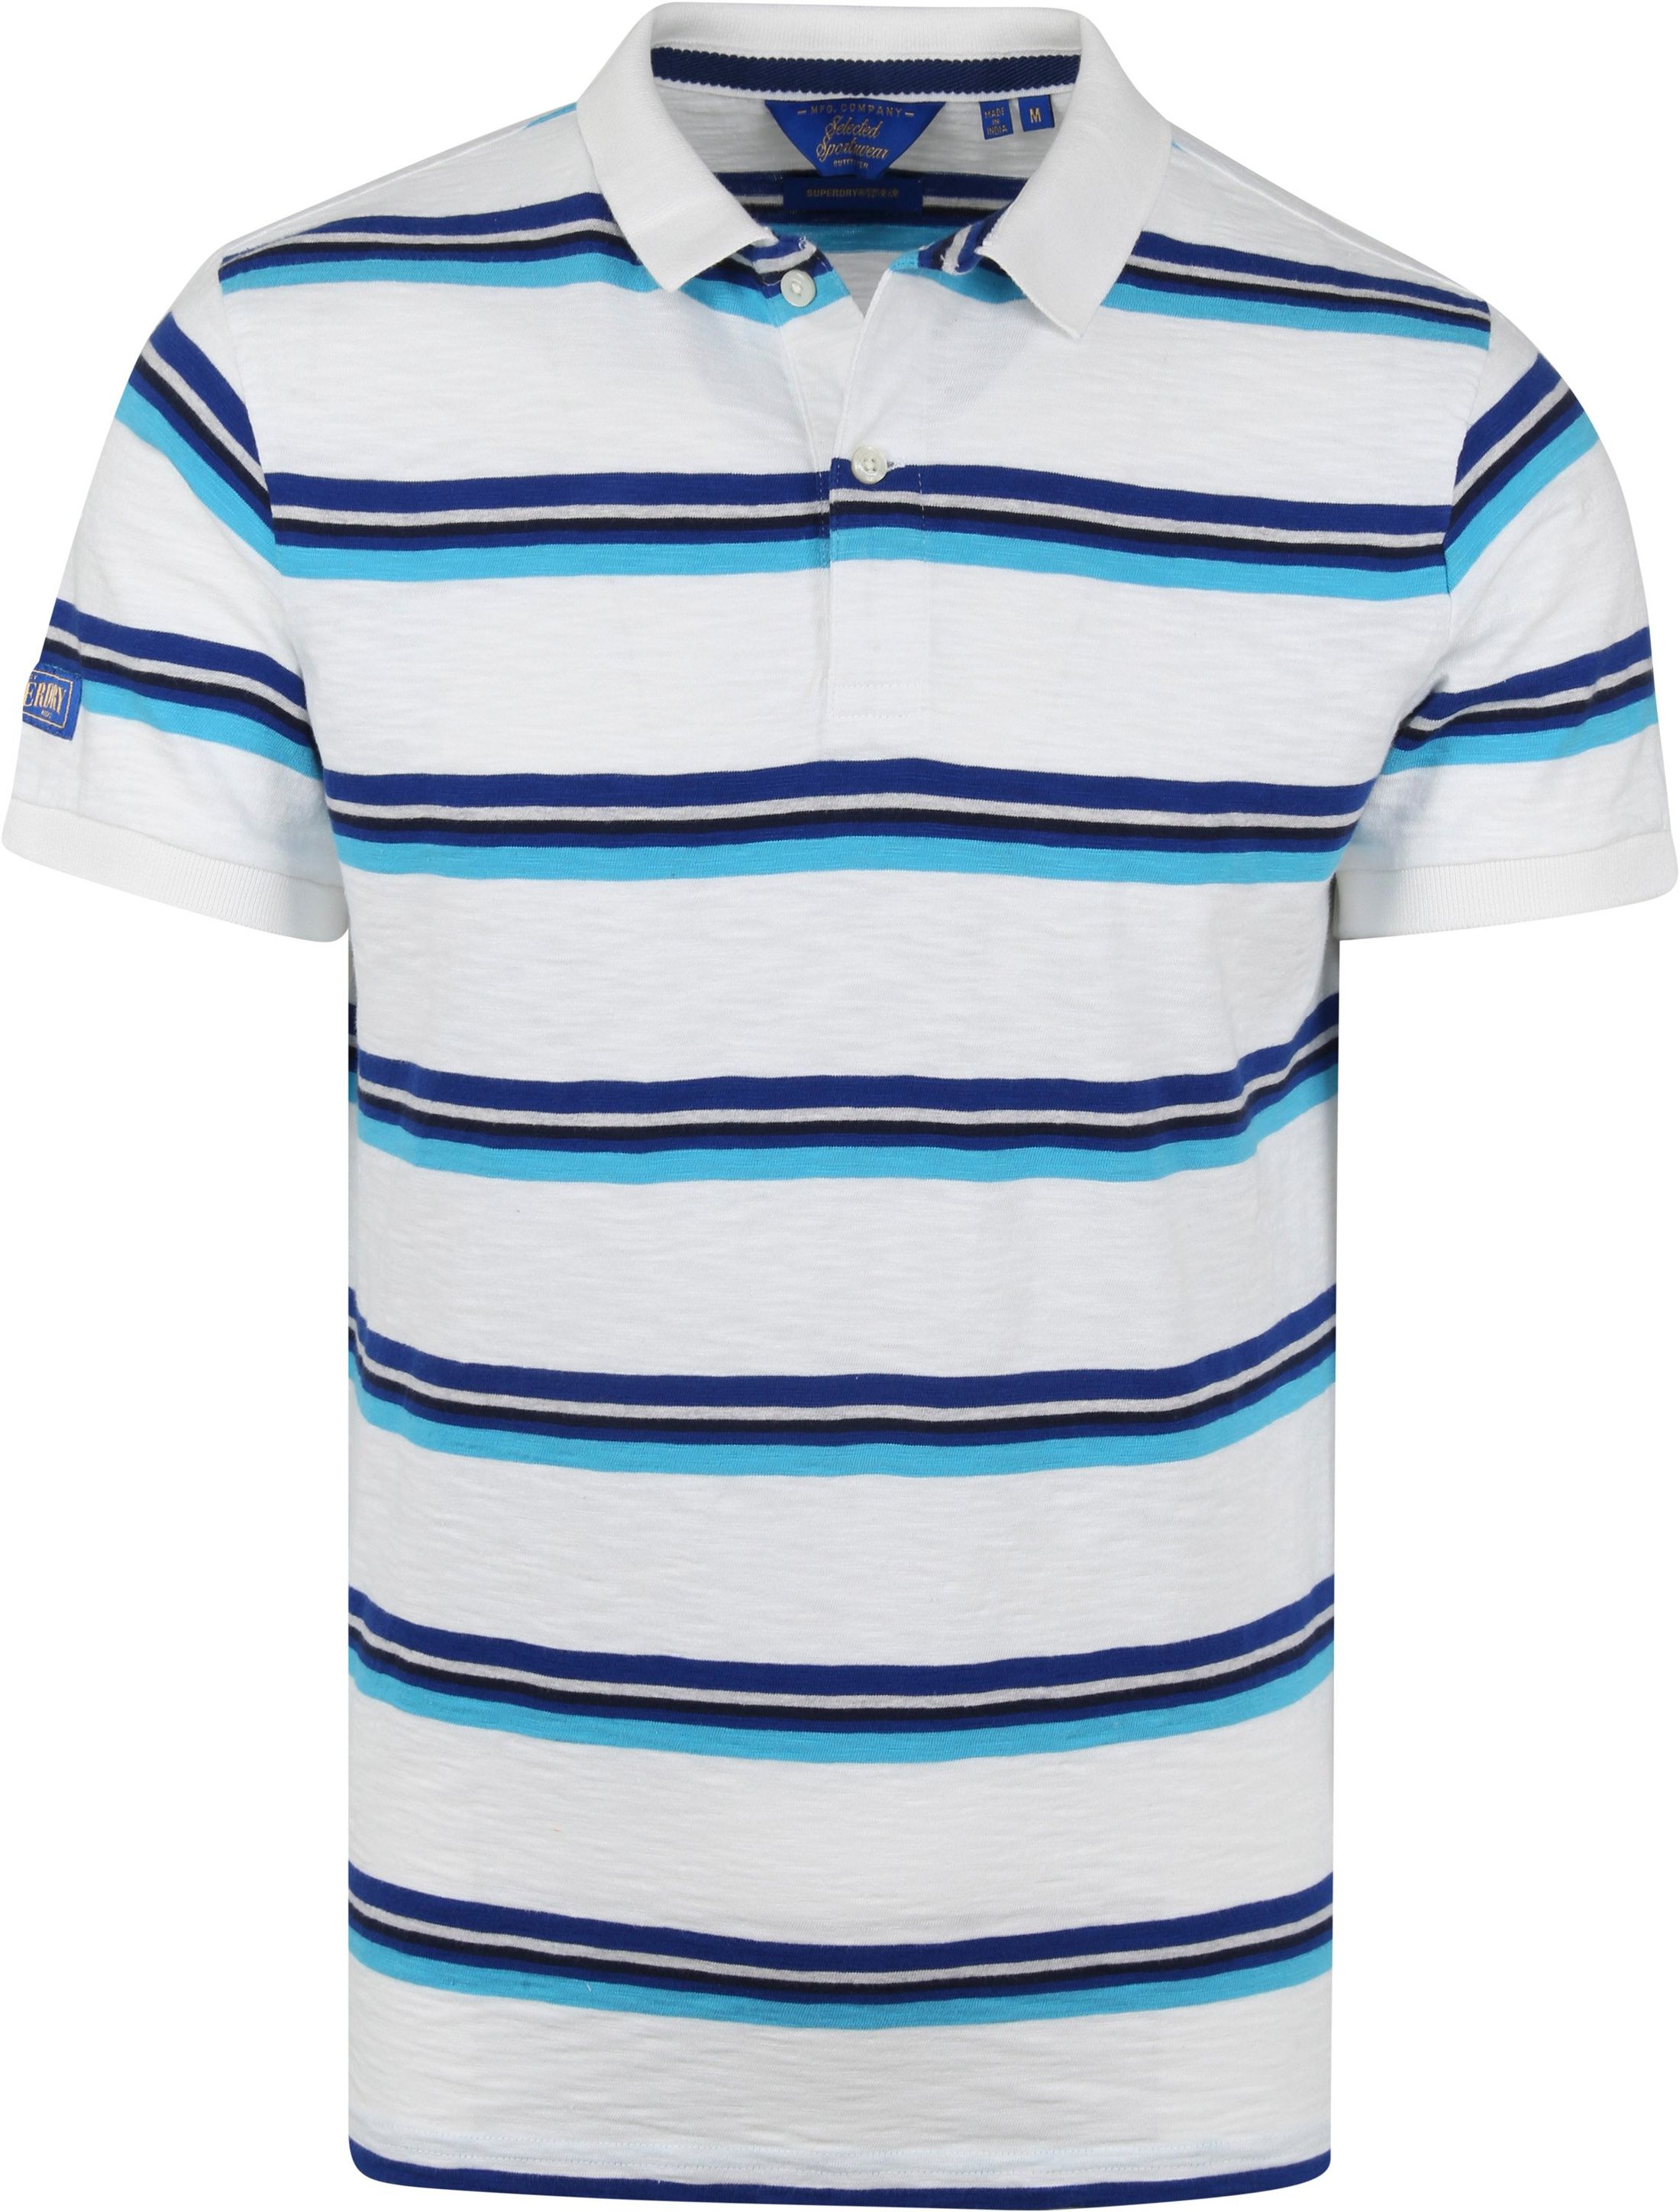 Superdry Classic Polo Shirt Stripes White Blue size L